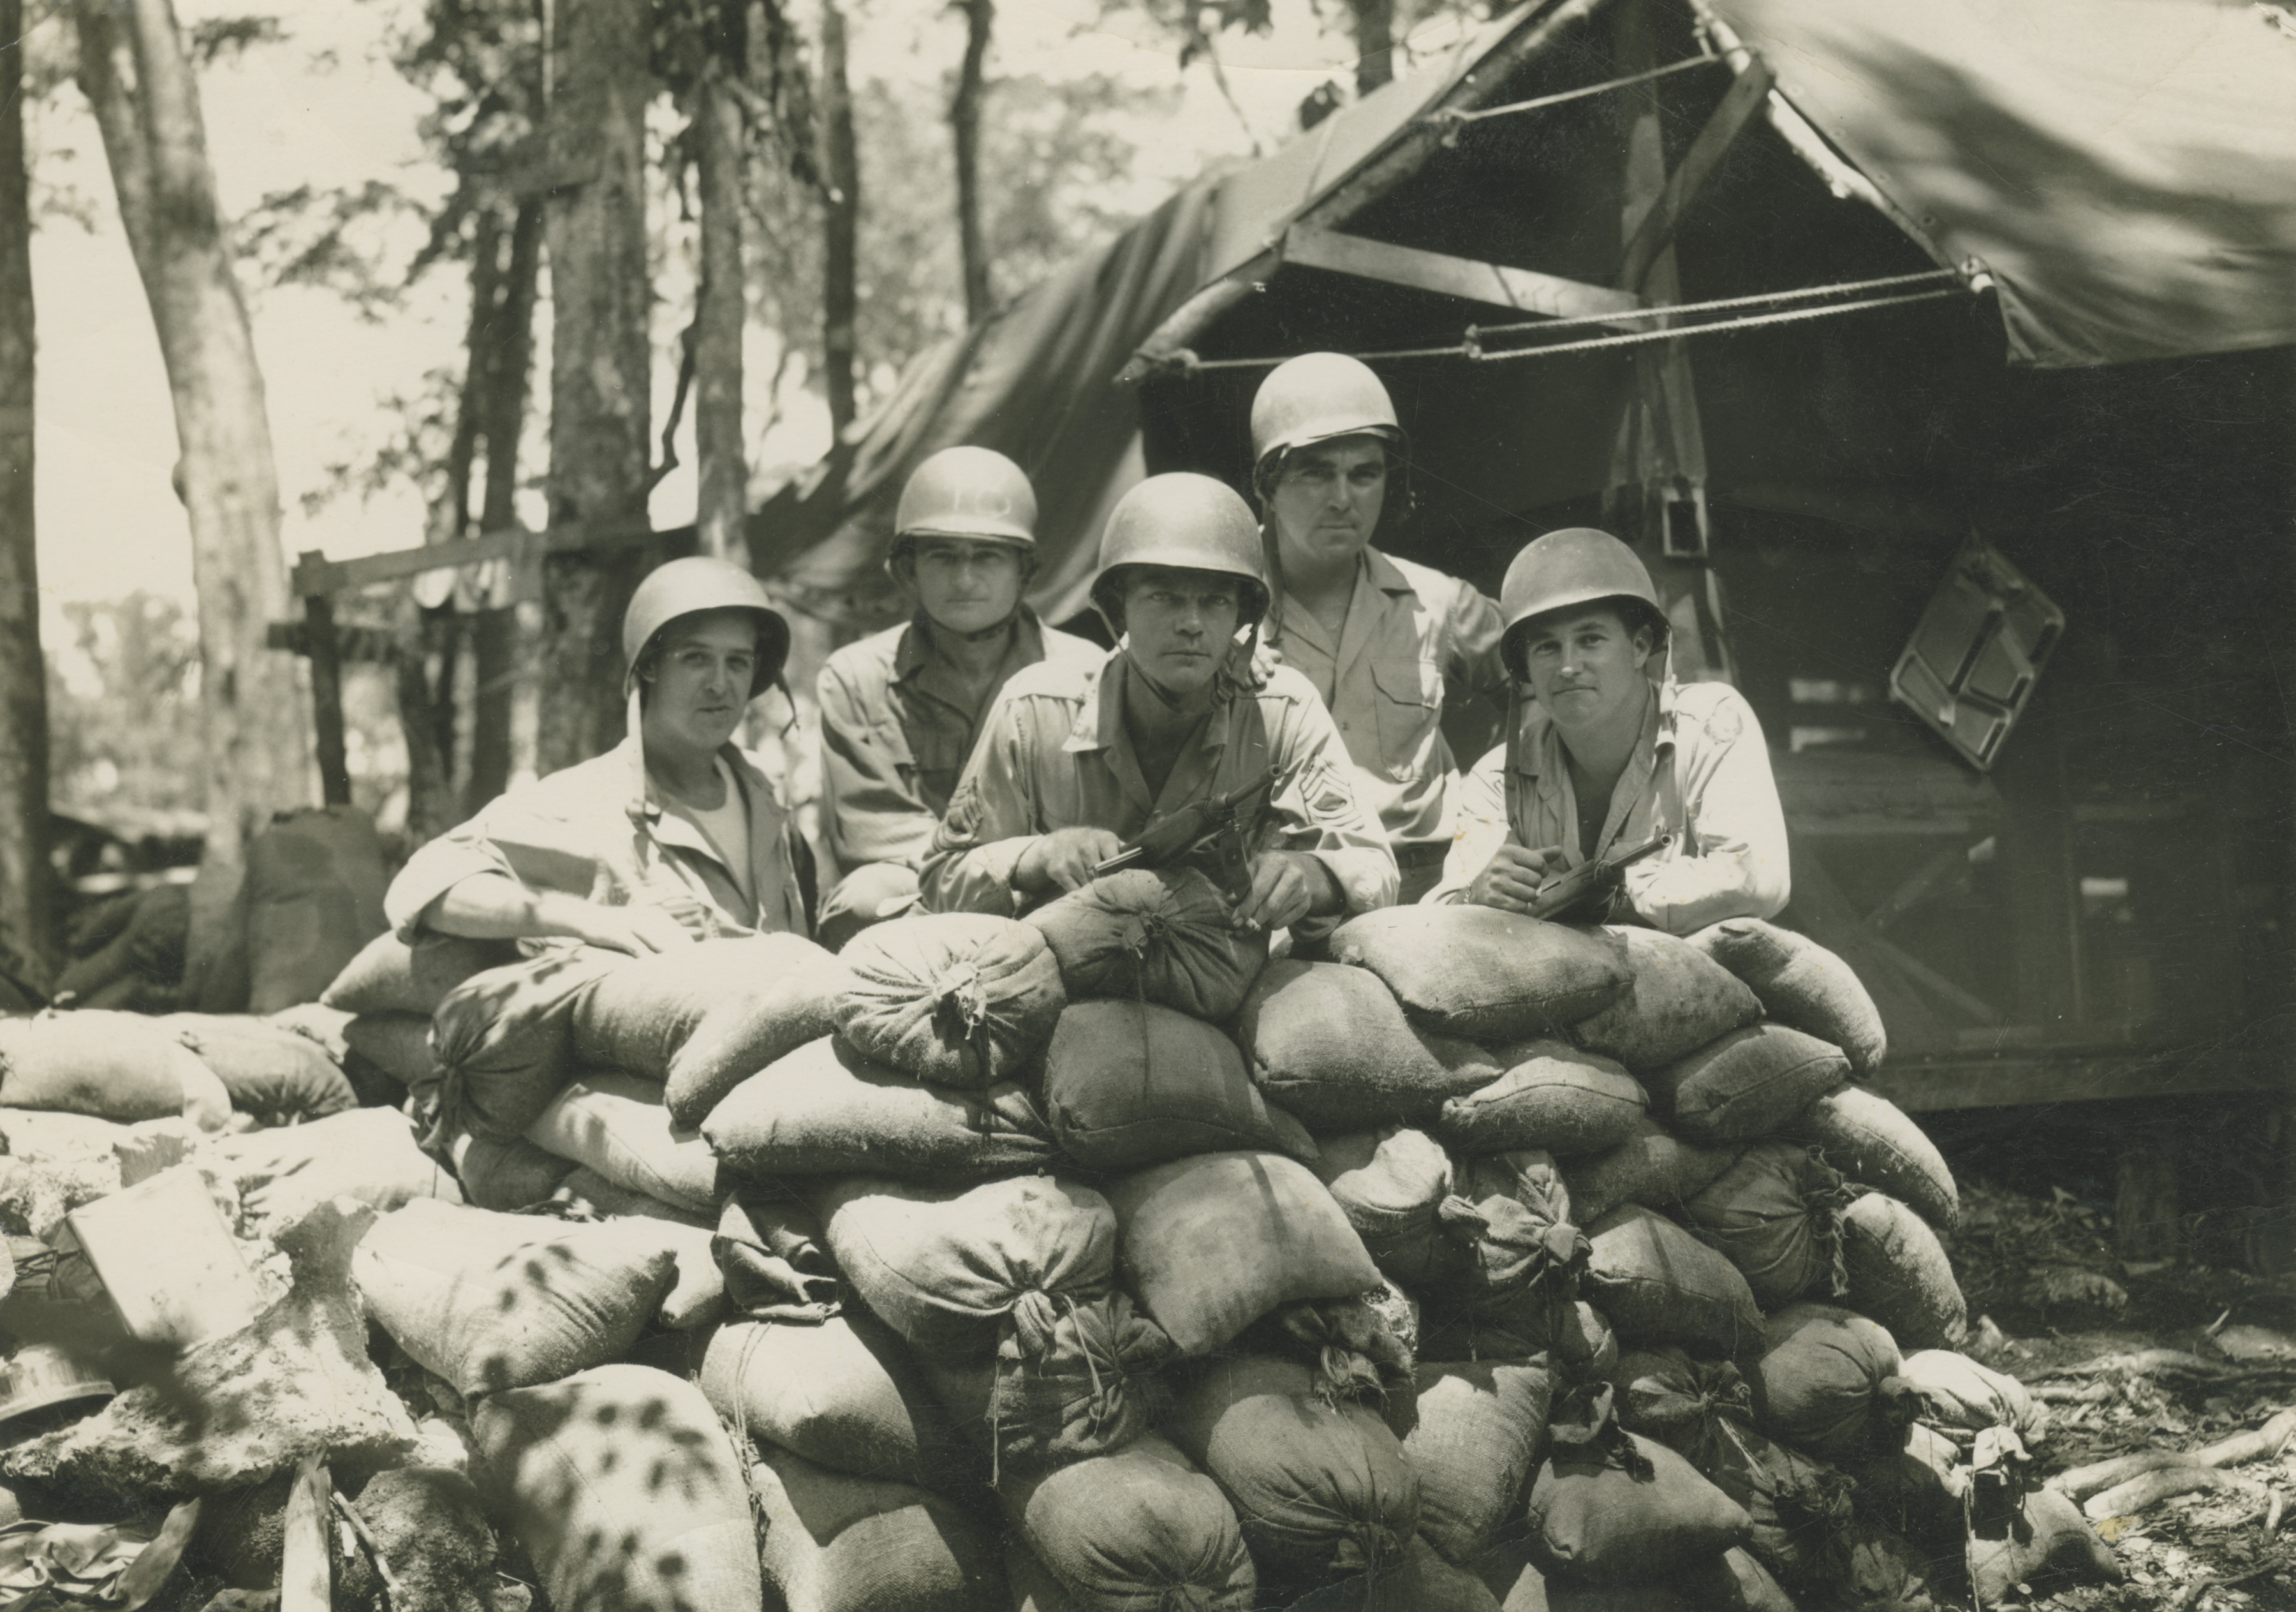 Soldiers pose behind sandbags during WWII